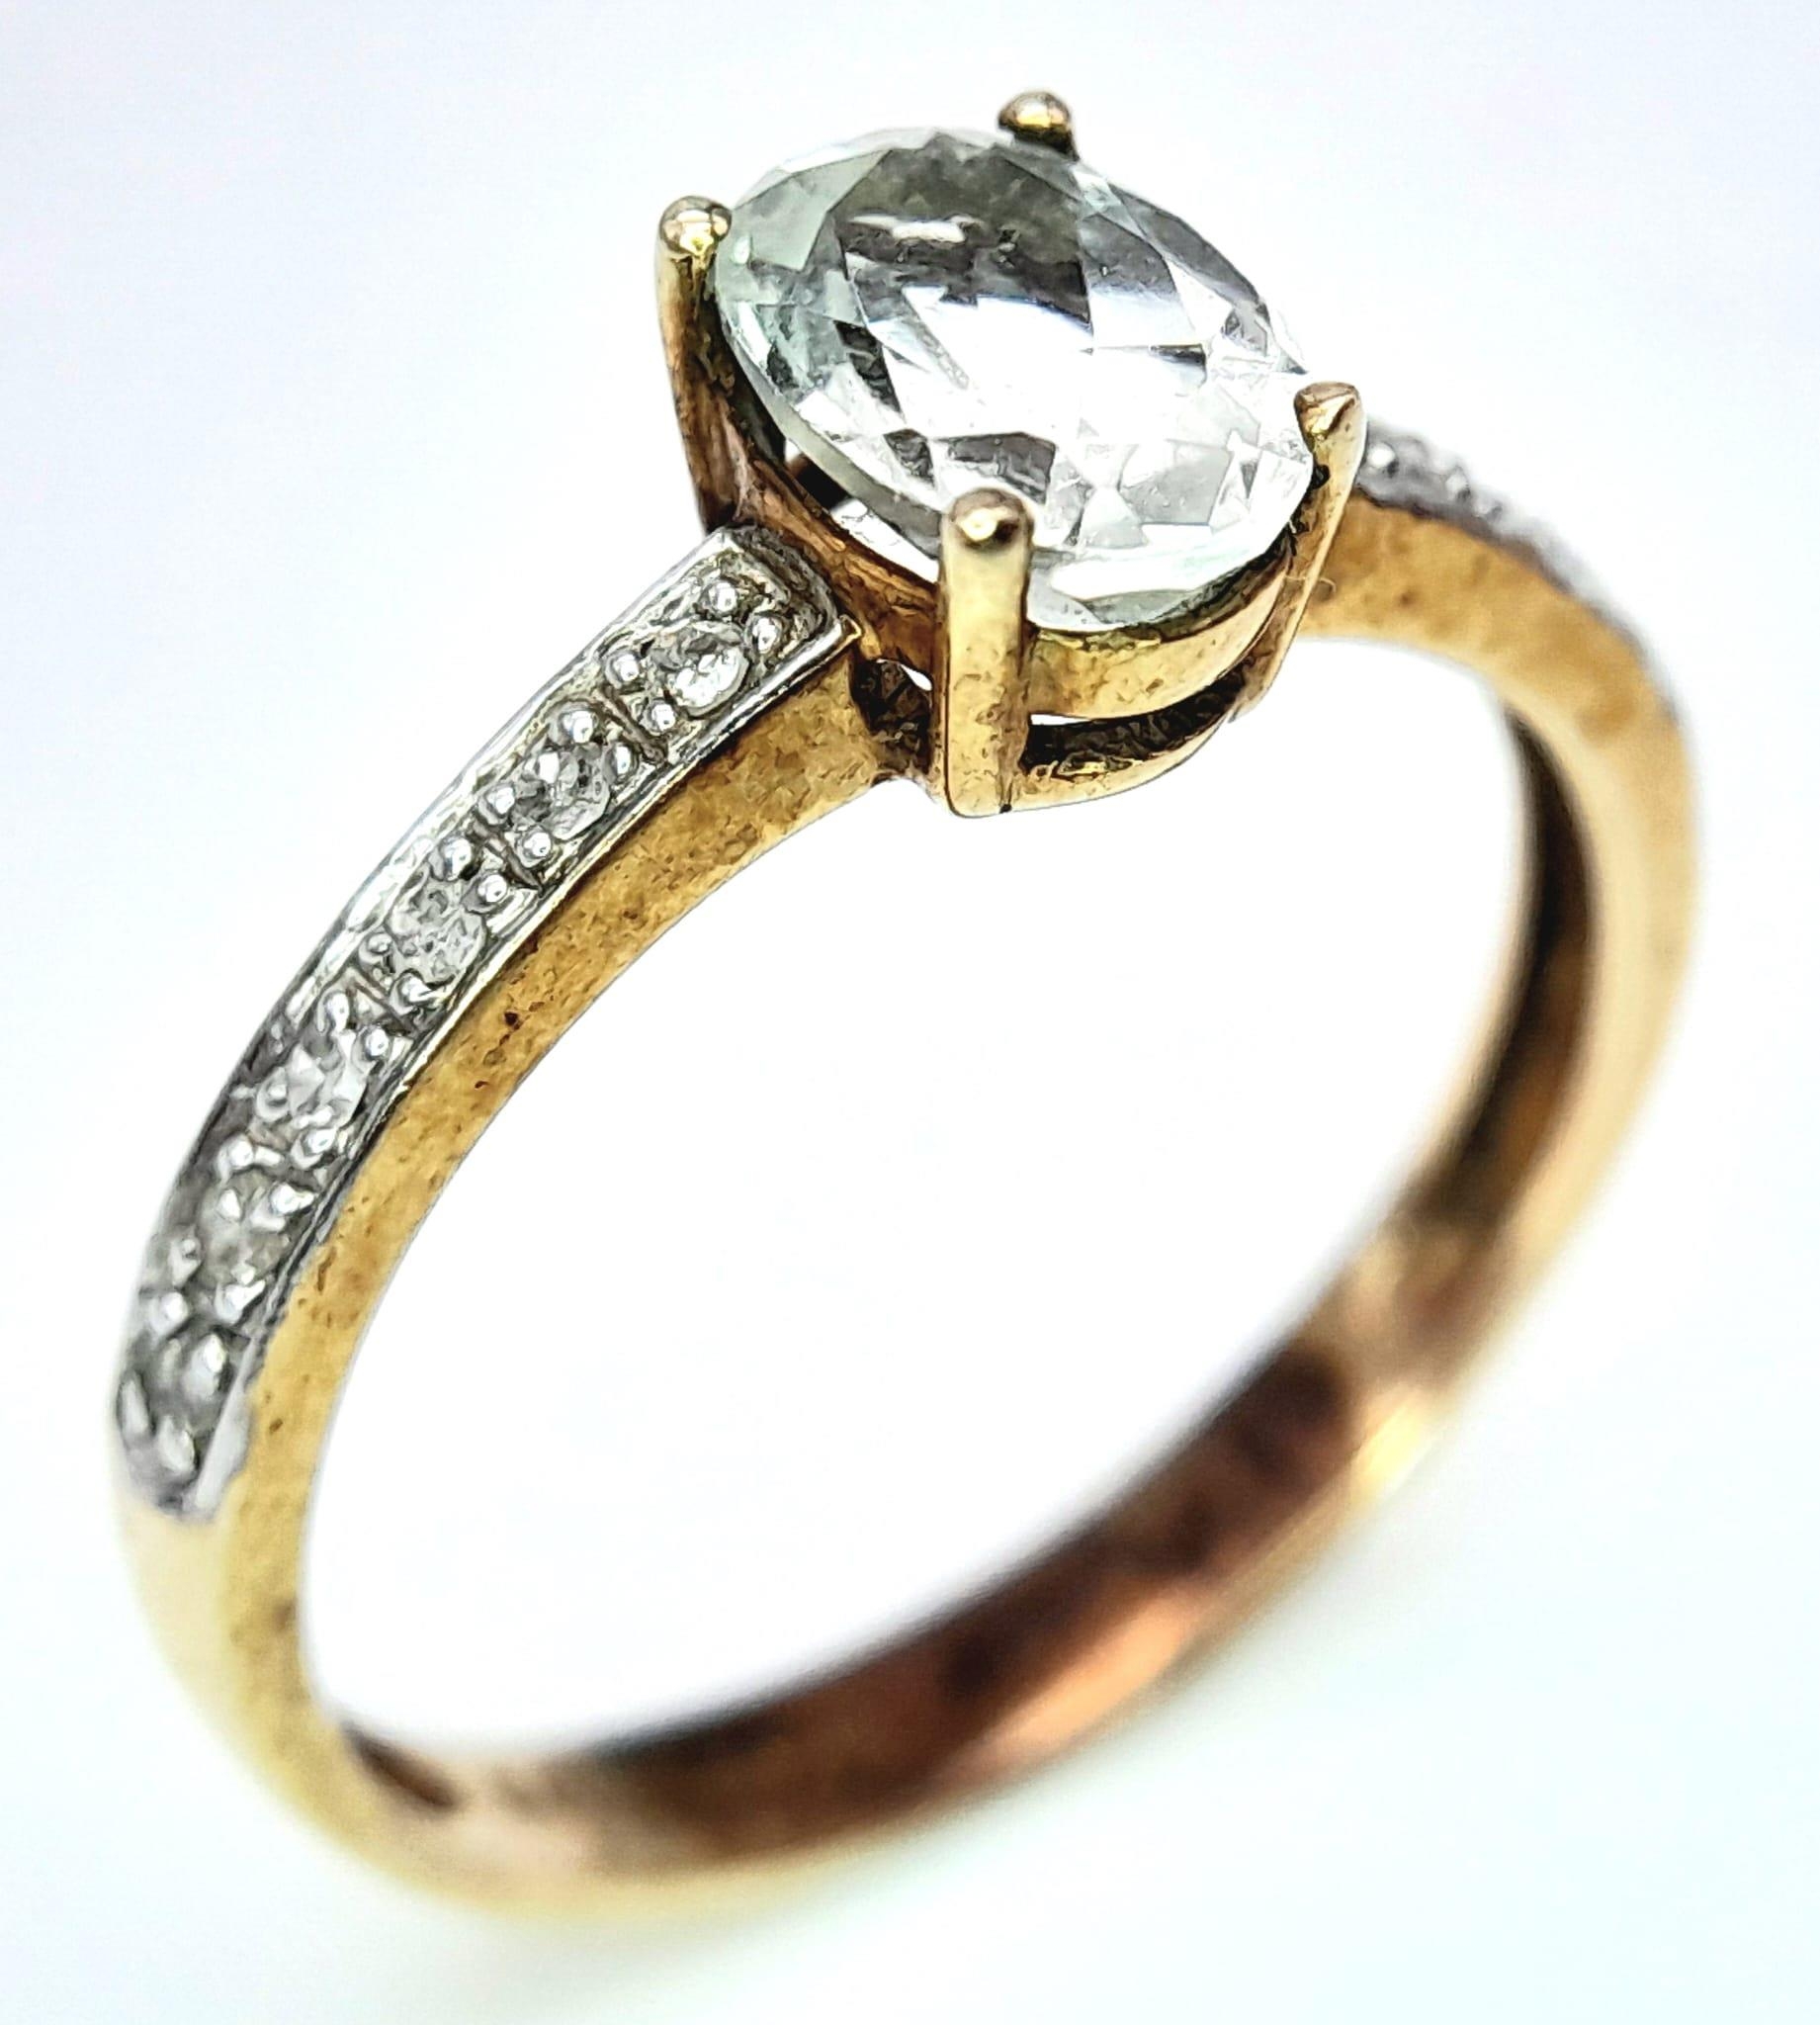 A 9K YELLOW GOLD DIAMOND & AQUAMARINE SET RING. OVAL AQUAMARINE GEMSTONE APPROX 0.75CT. 1.8G. SIZE N - Image 4 of 6